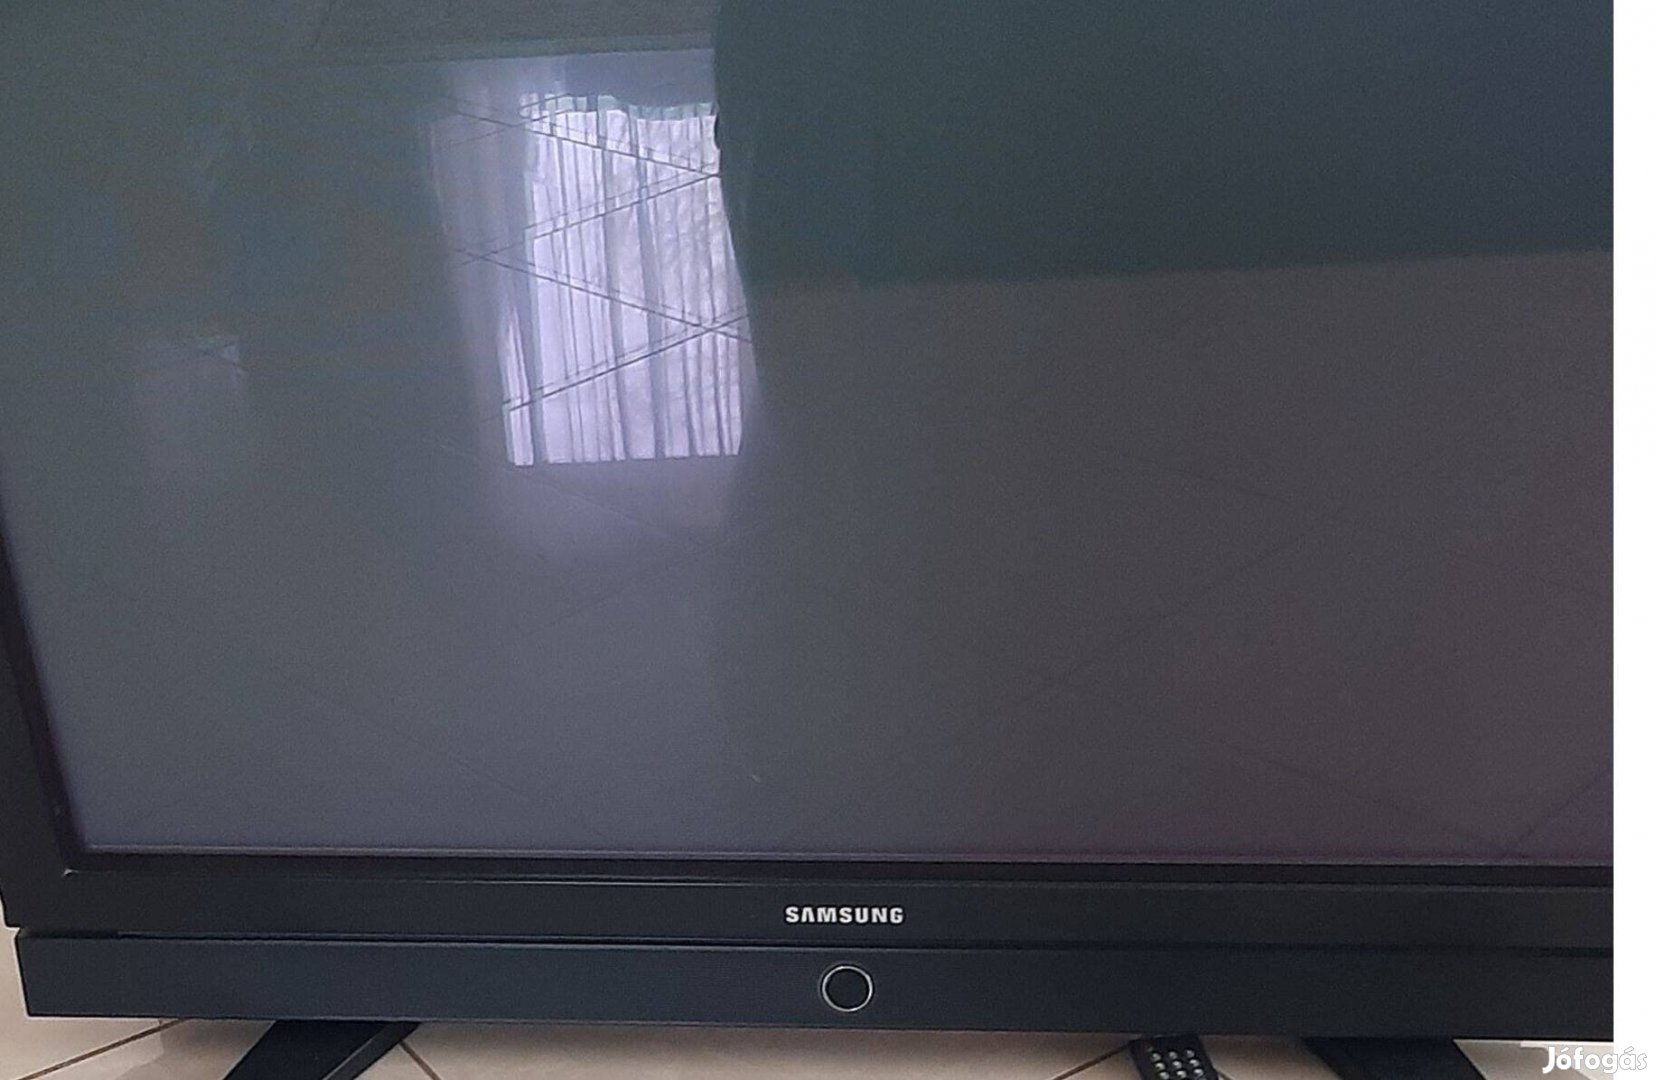 Samsung PS42V6S 106.7 cm plazma TV eladó